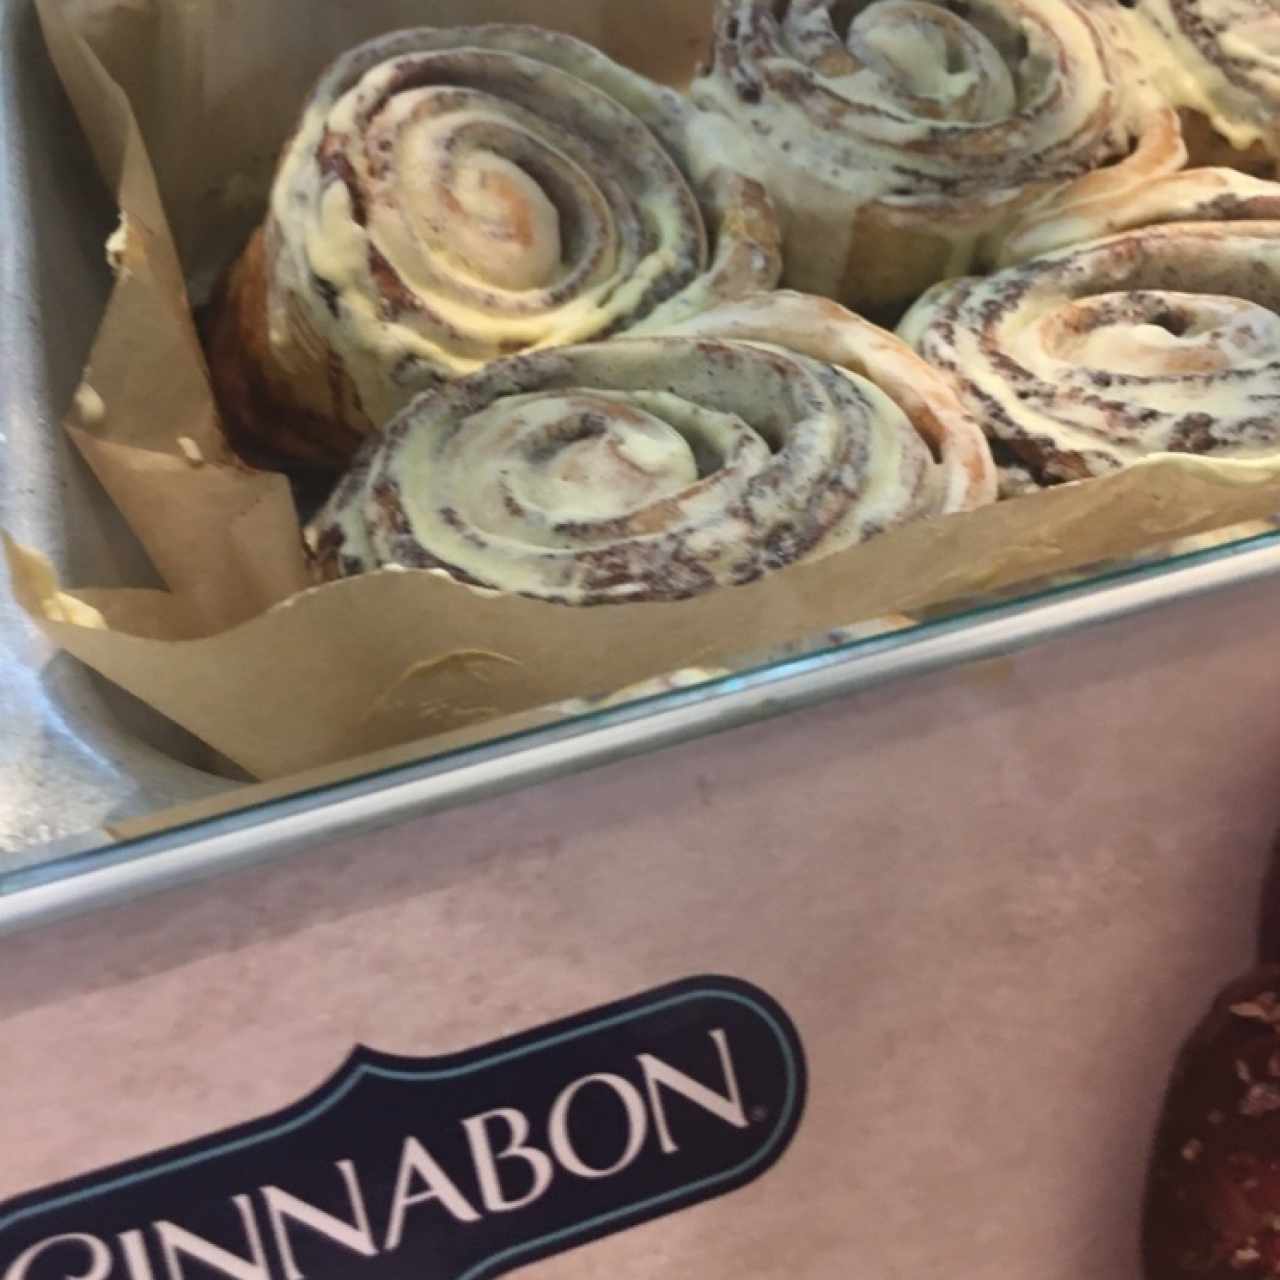 Cinnabon rolls. 